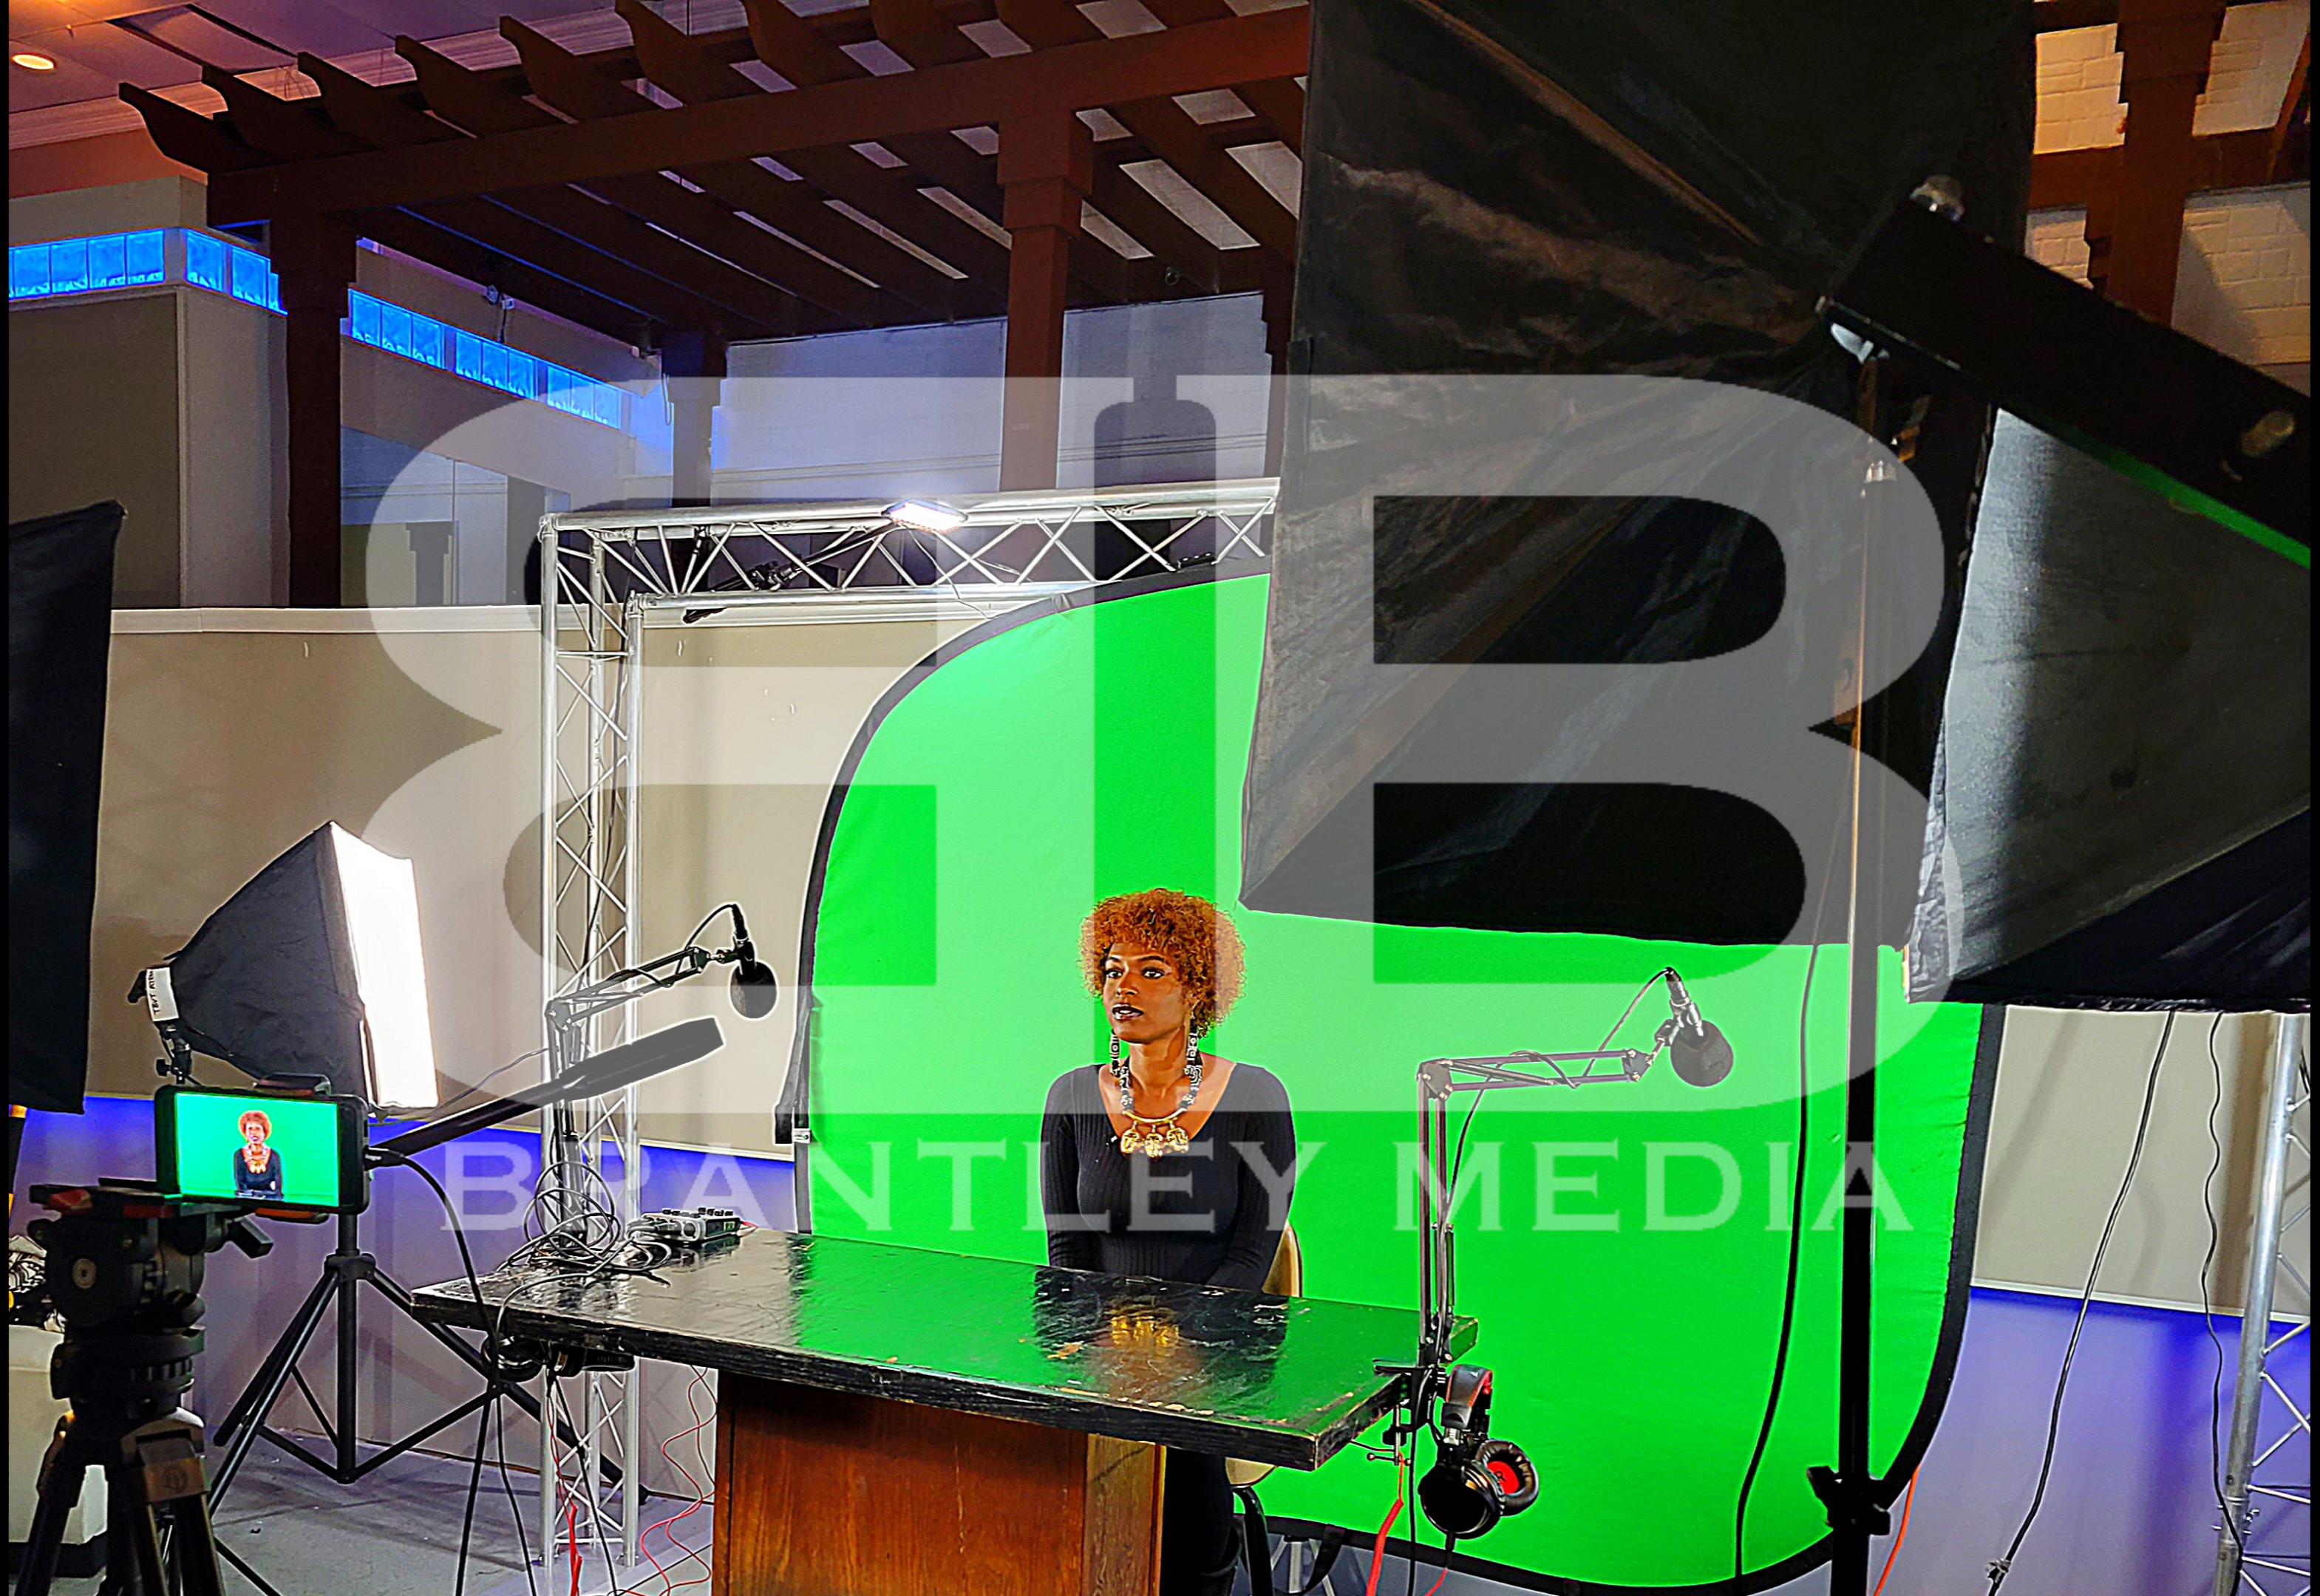 Green Screne with Brantley Media logo